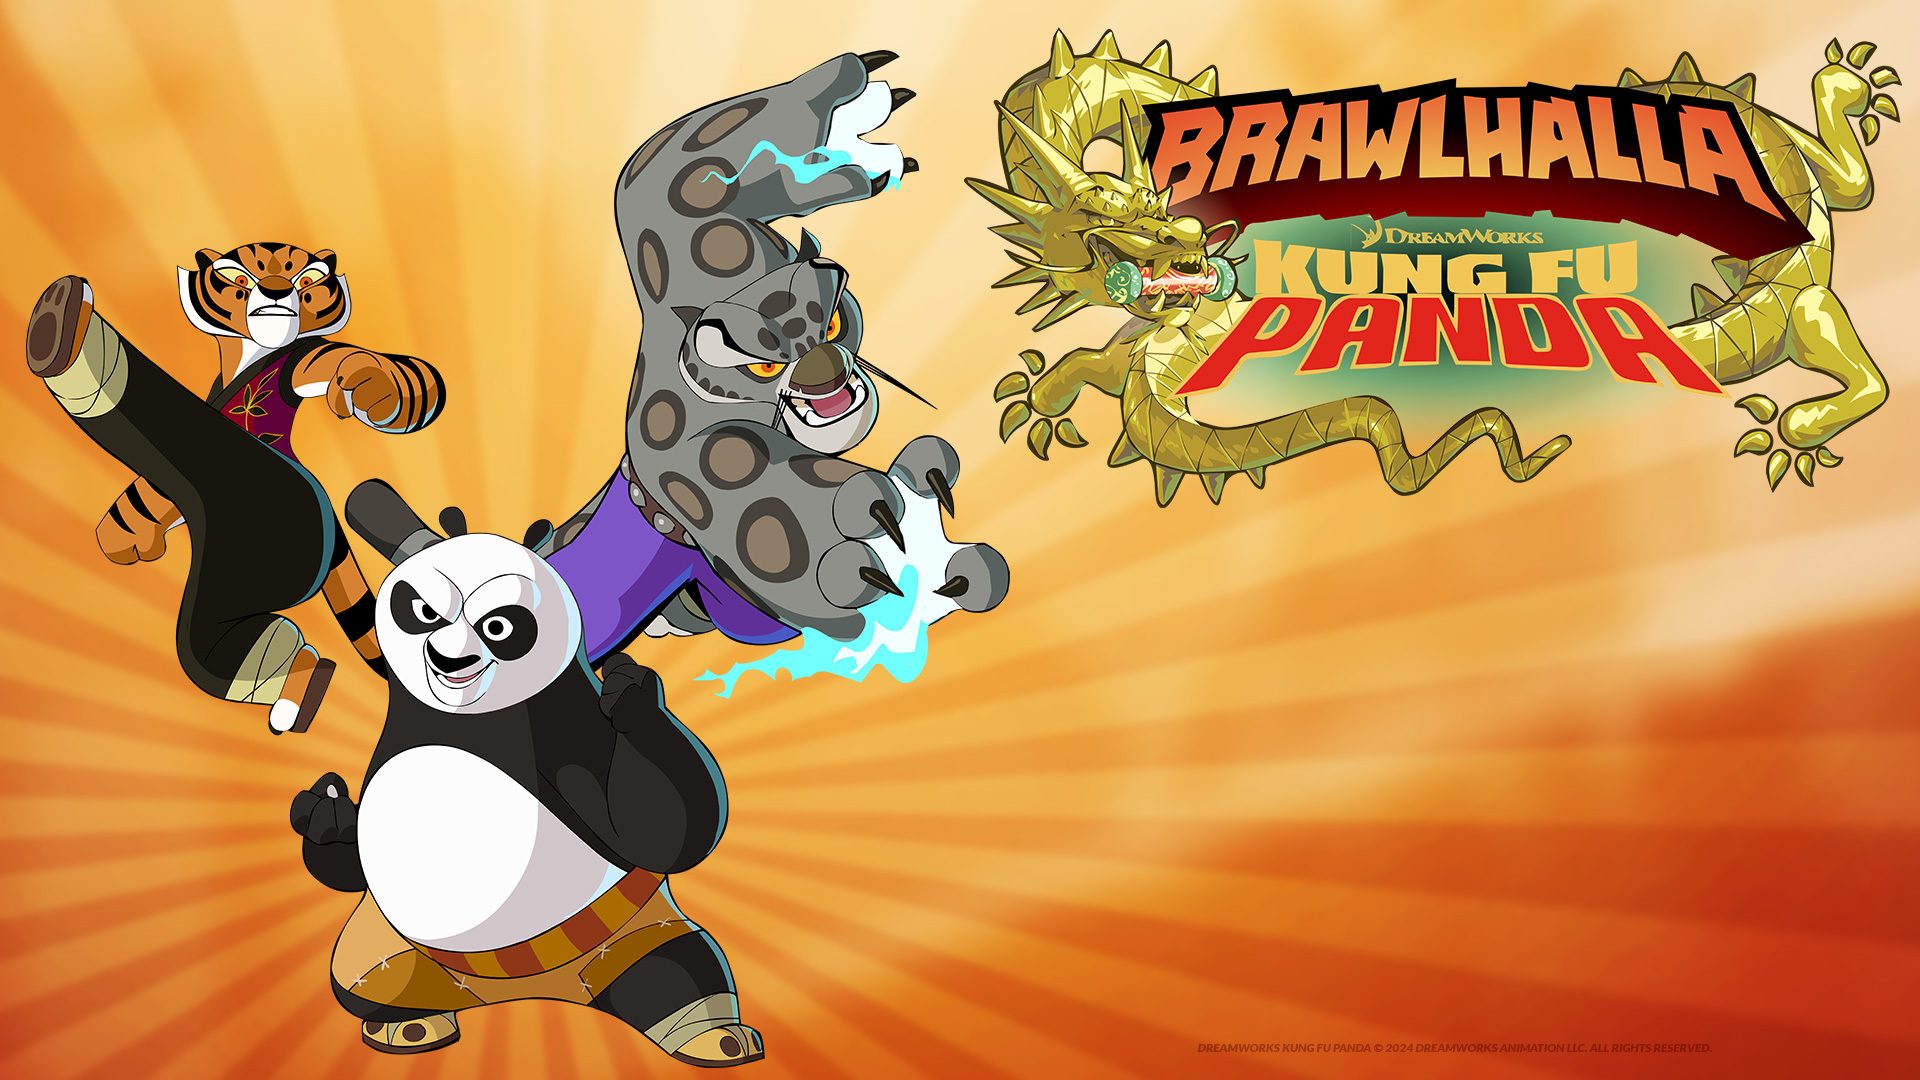 On Sale: Brawlhalla x Kung Fu Panda!